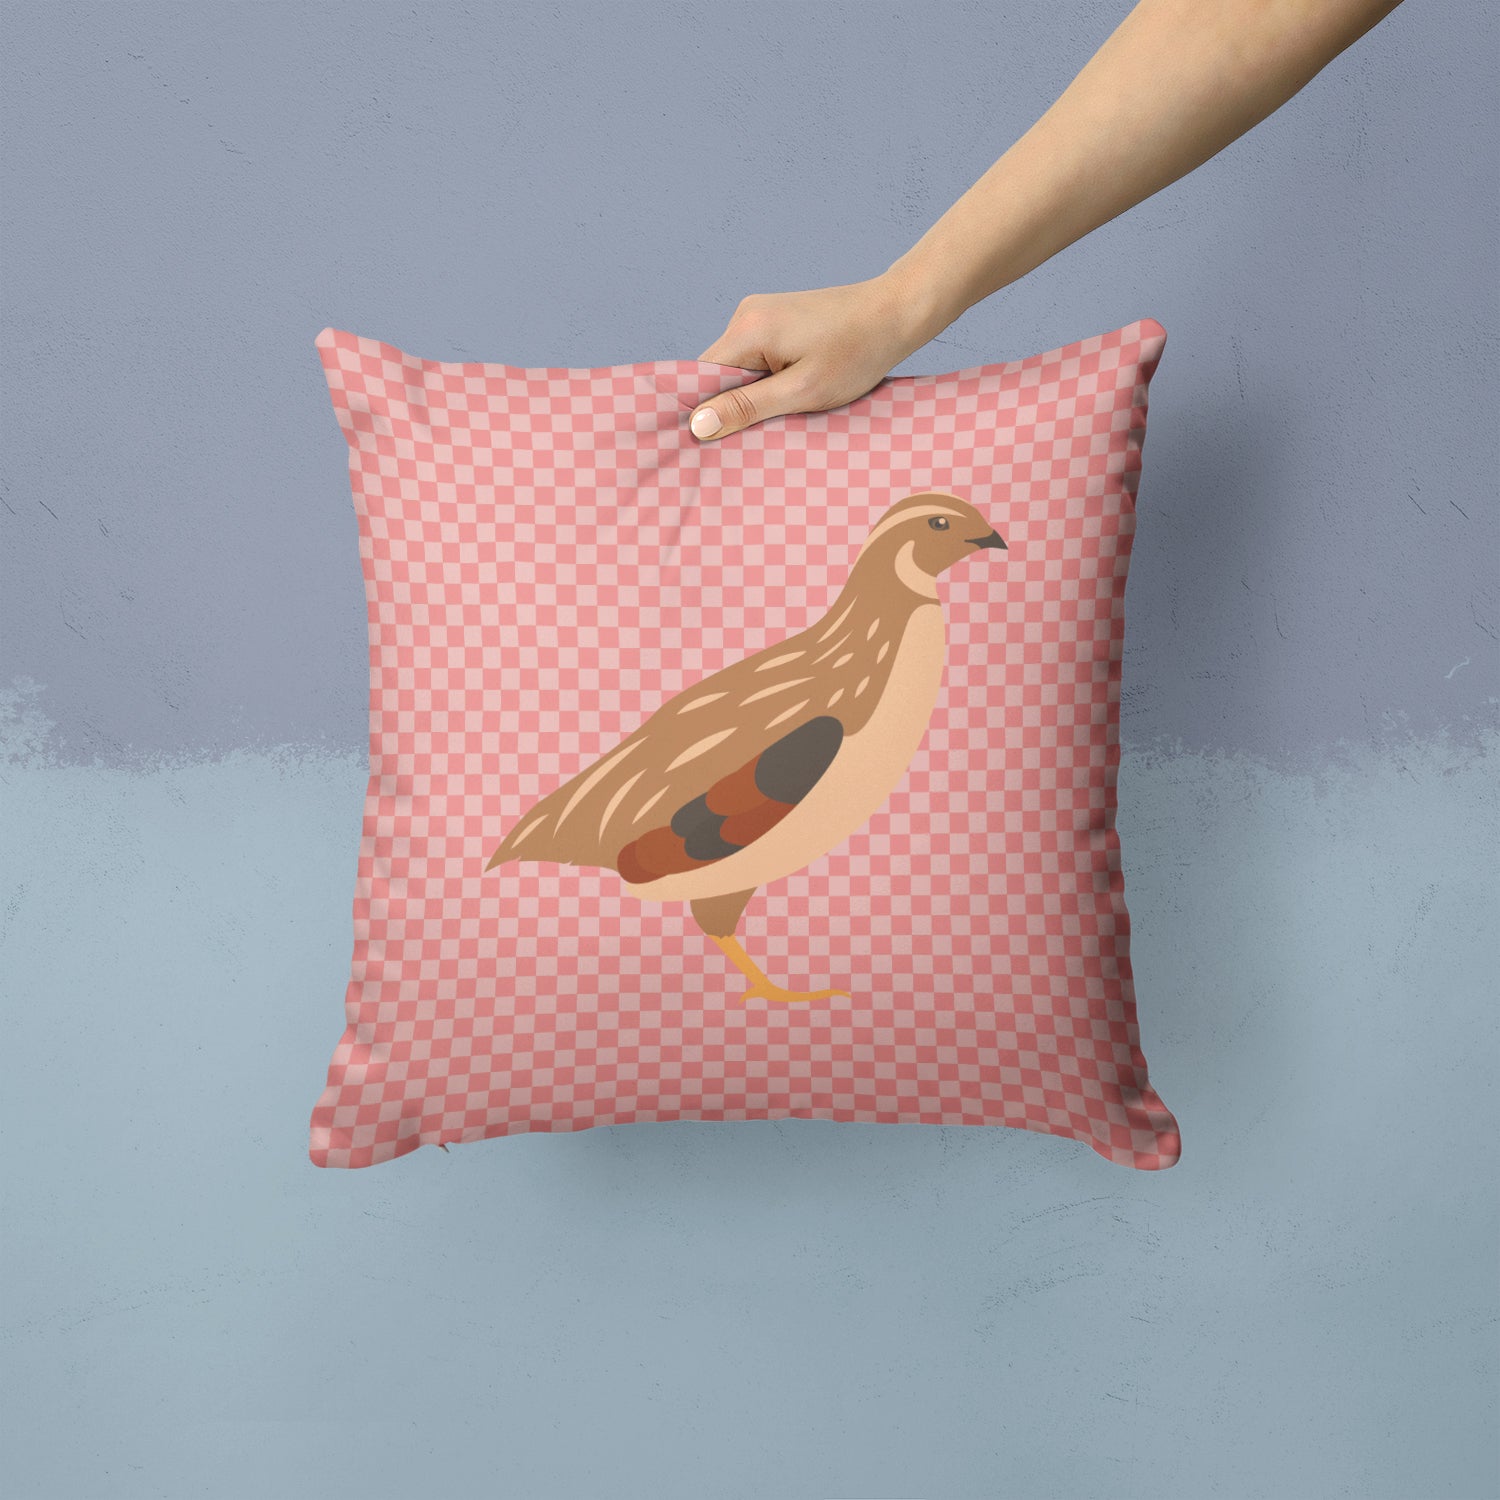 Golden Phoenix Quail Pink Check Fabric Decorative Pillow BB7955PW1414 - the-store.com